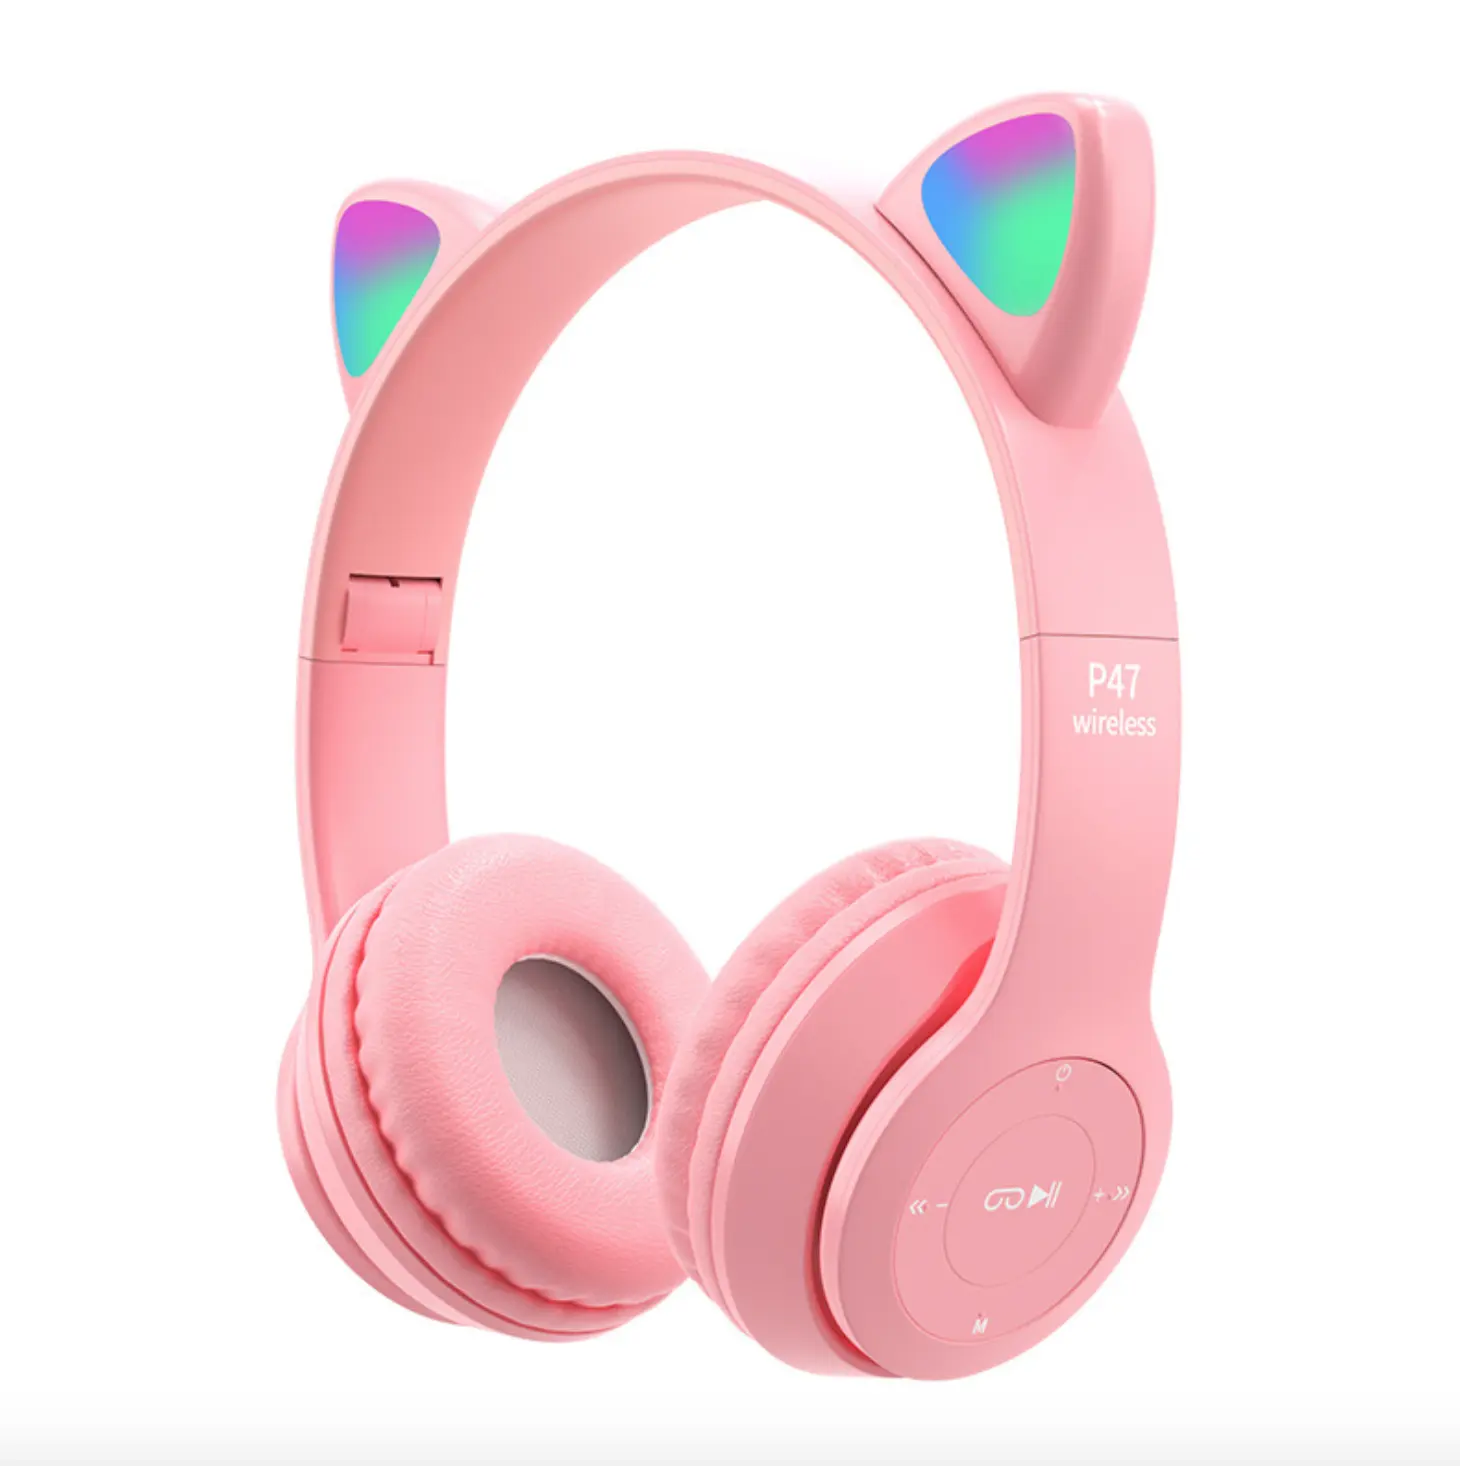 Foldable Wireless BT Headphone P47M pink LED cat headphone Support Tf card Fstereo headset Blue-tooh earphones